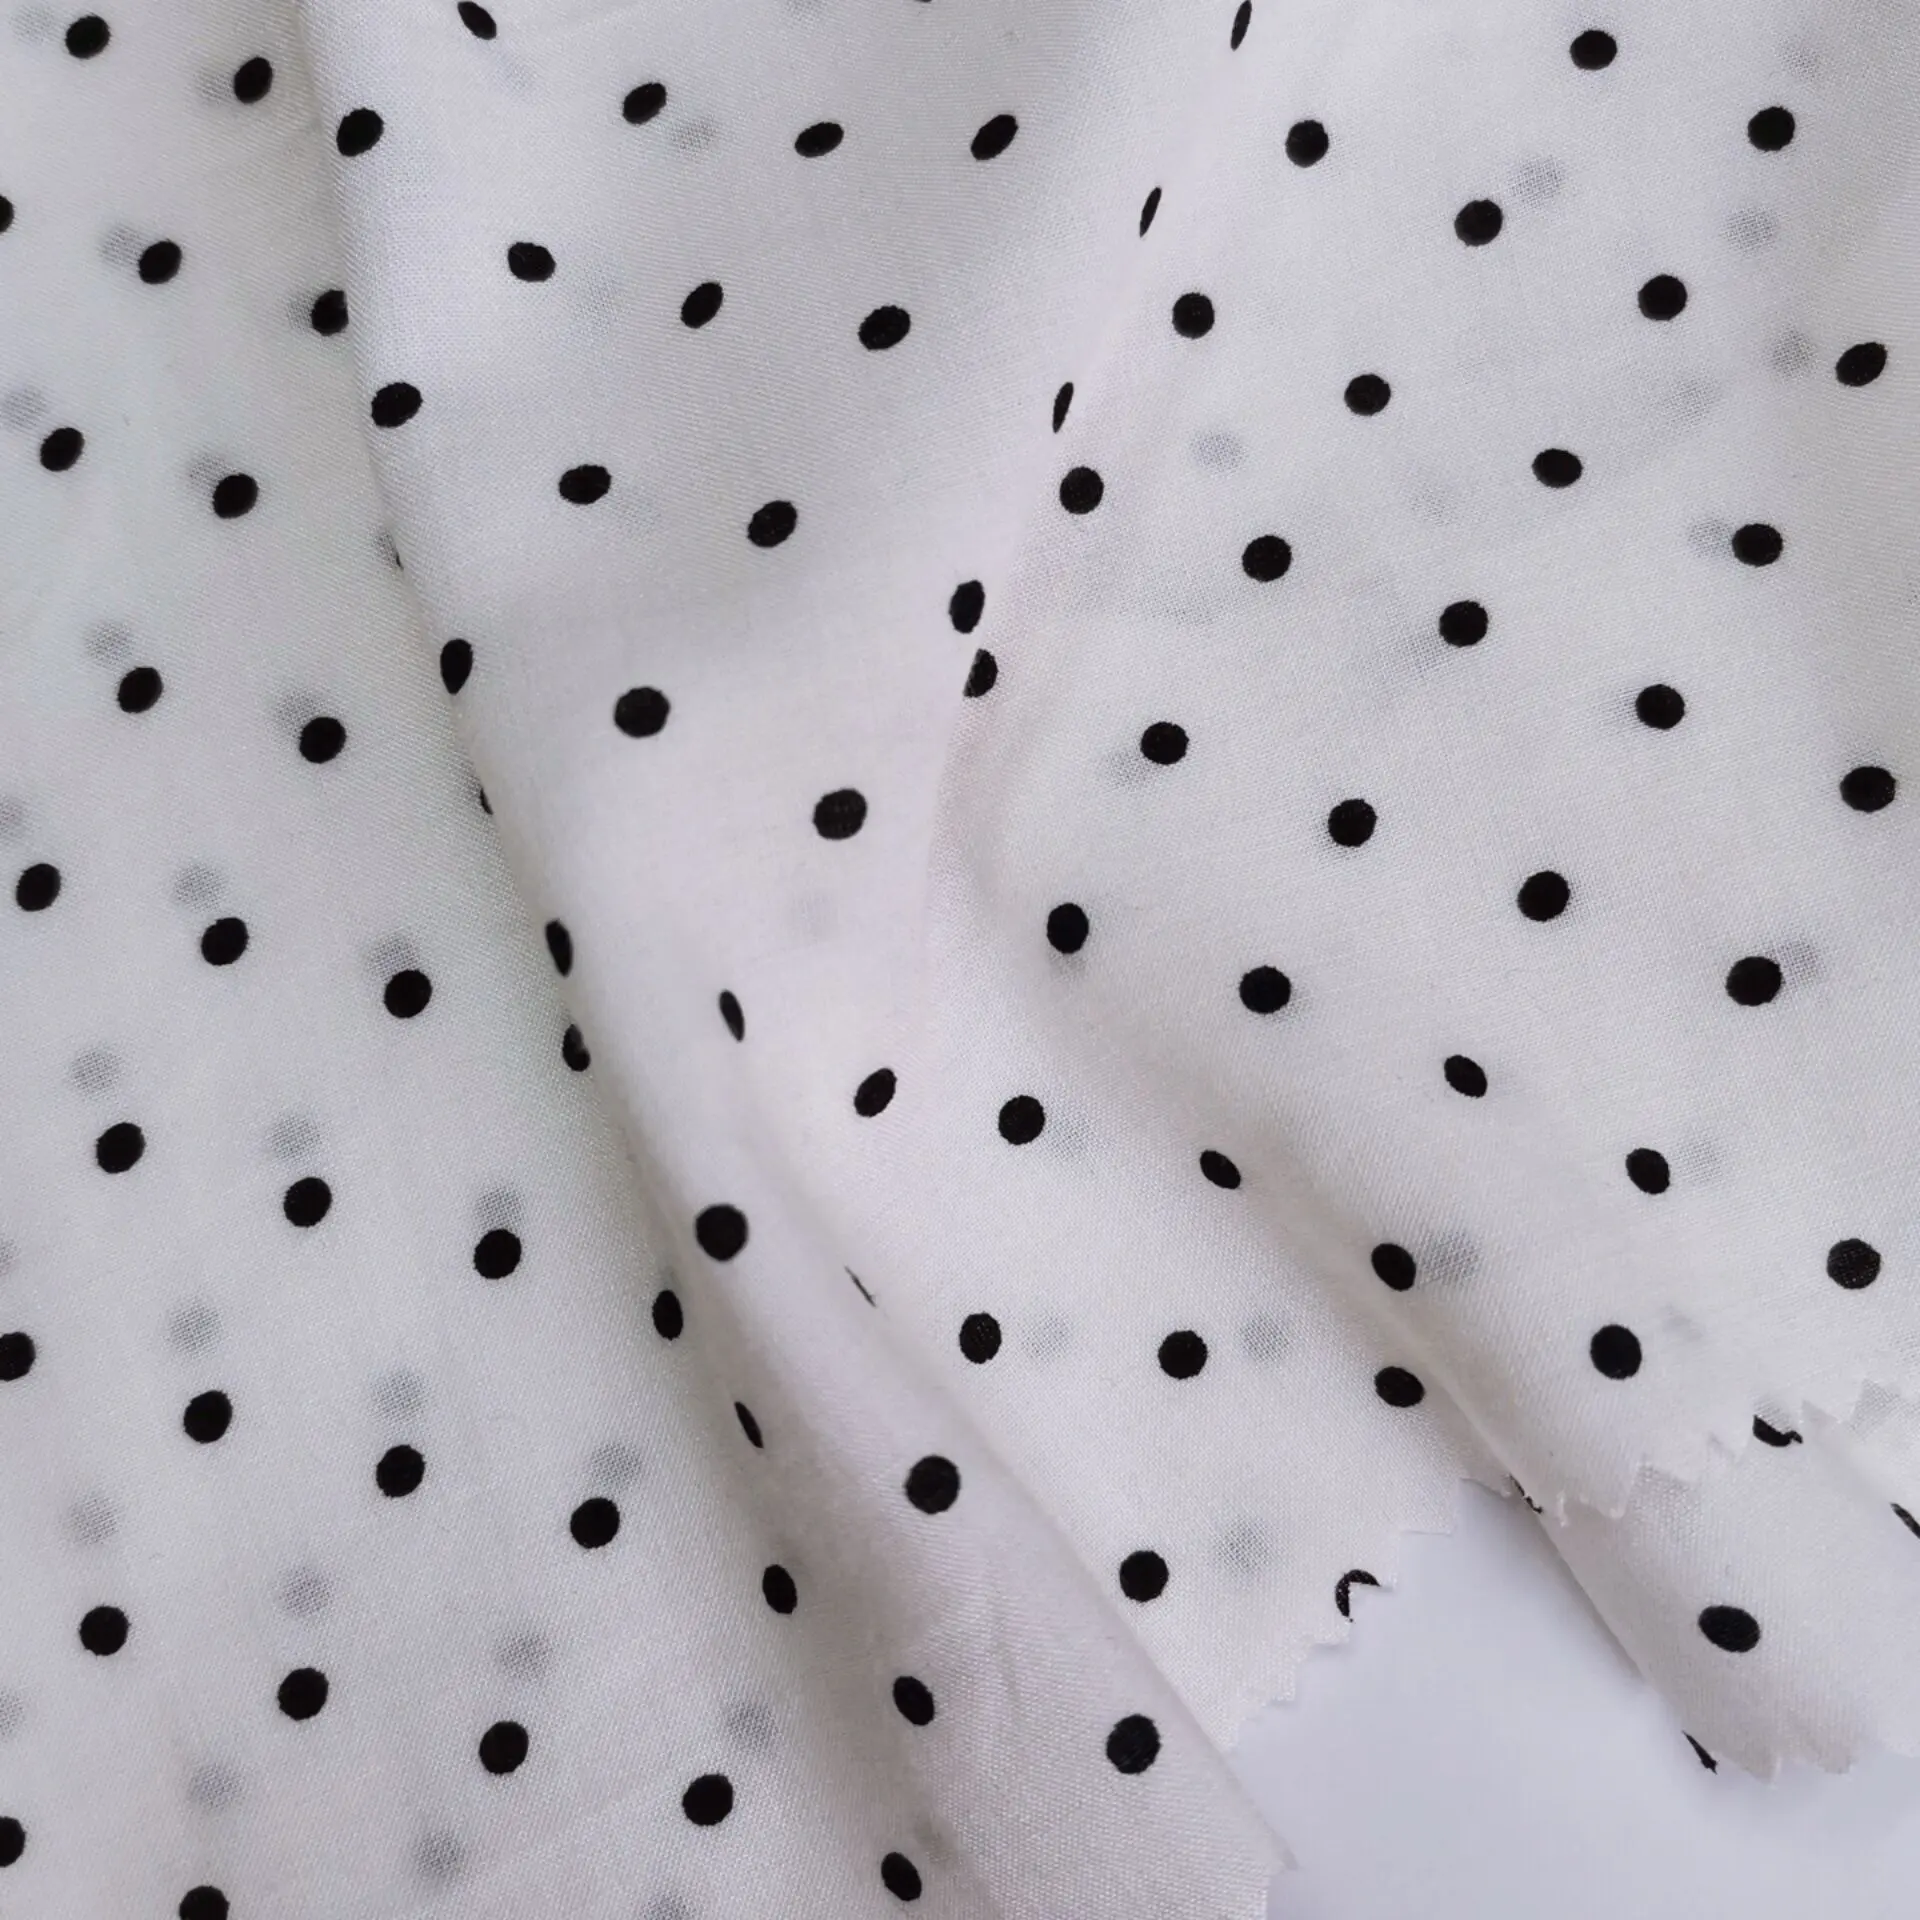 China woven fabric supplier Rayon 100% dots print women's girl's skirts dress fabric printing